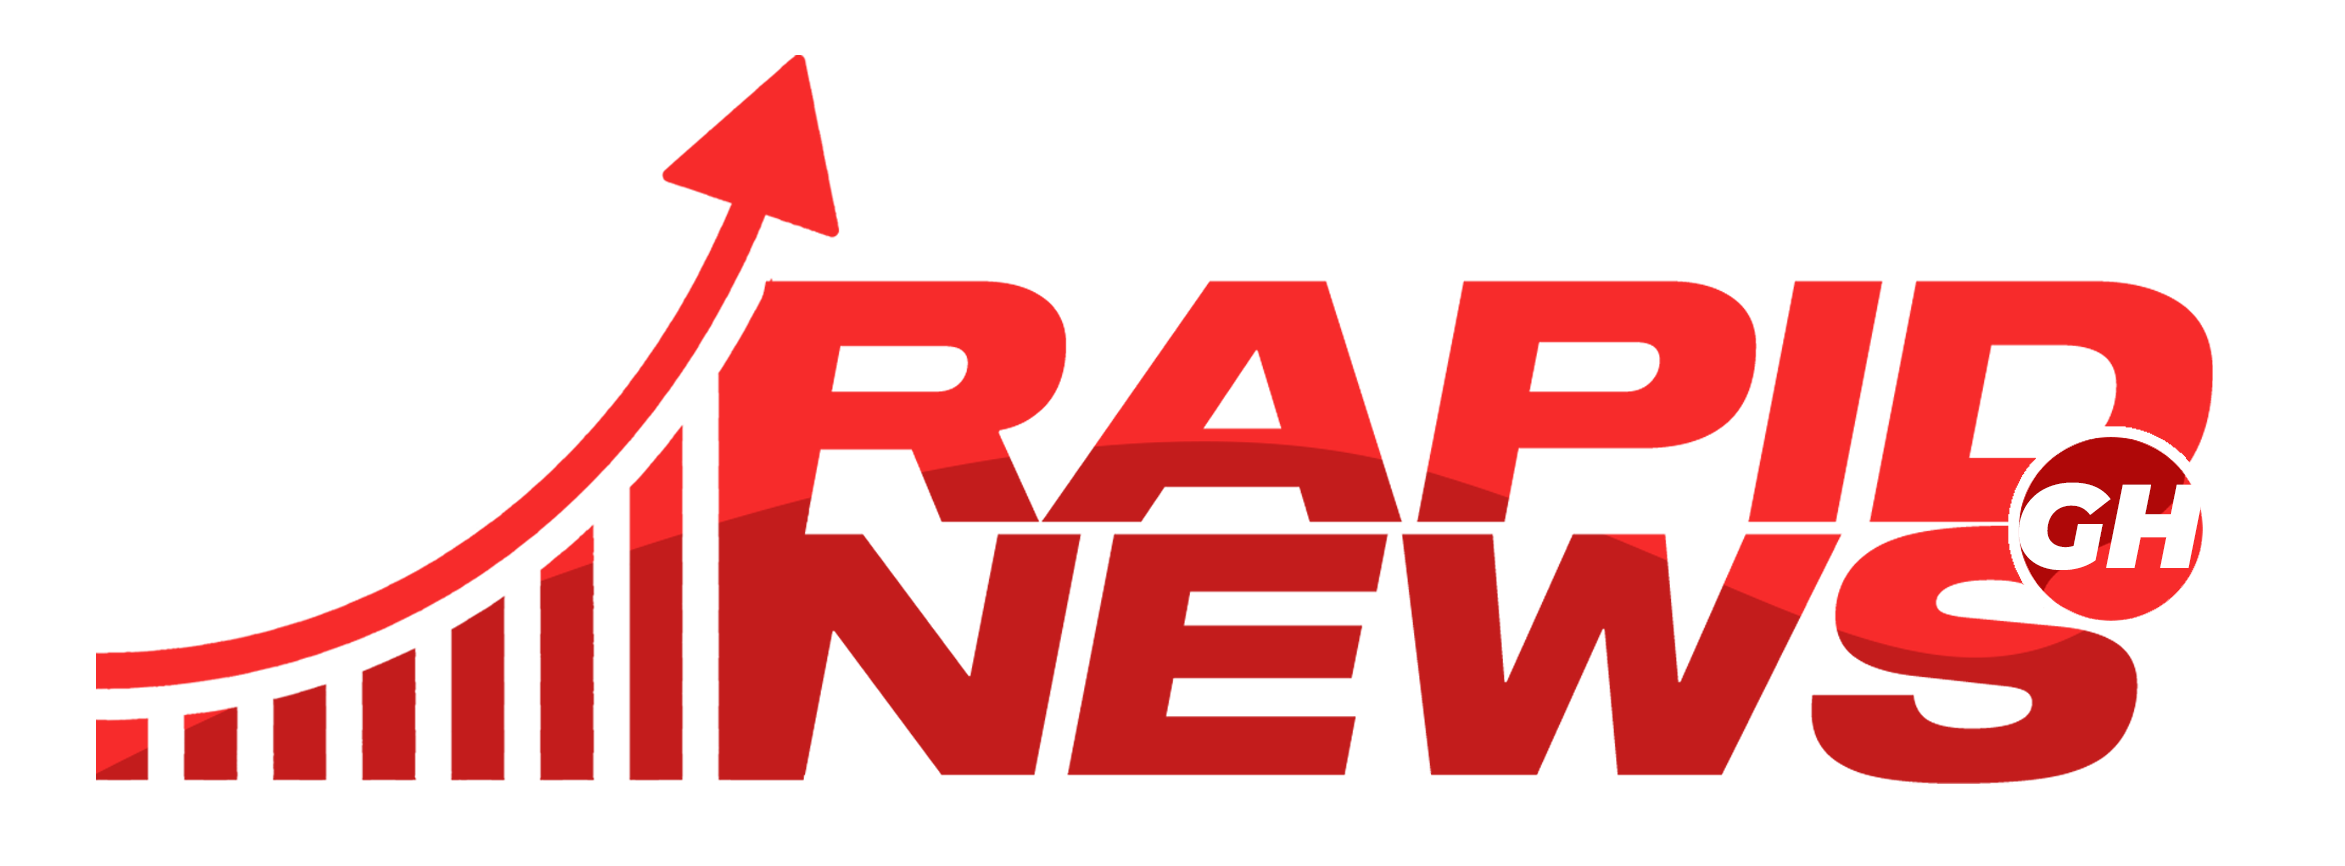 Rapid news transparent logo